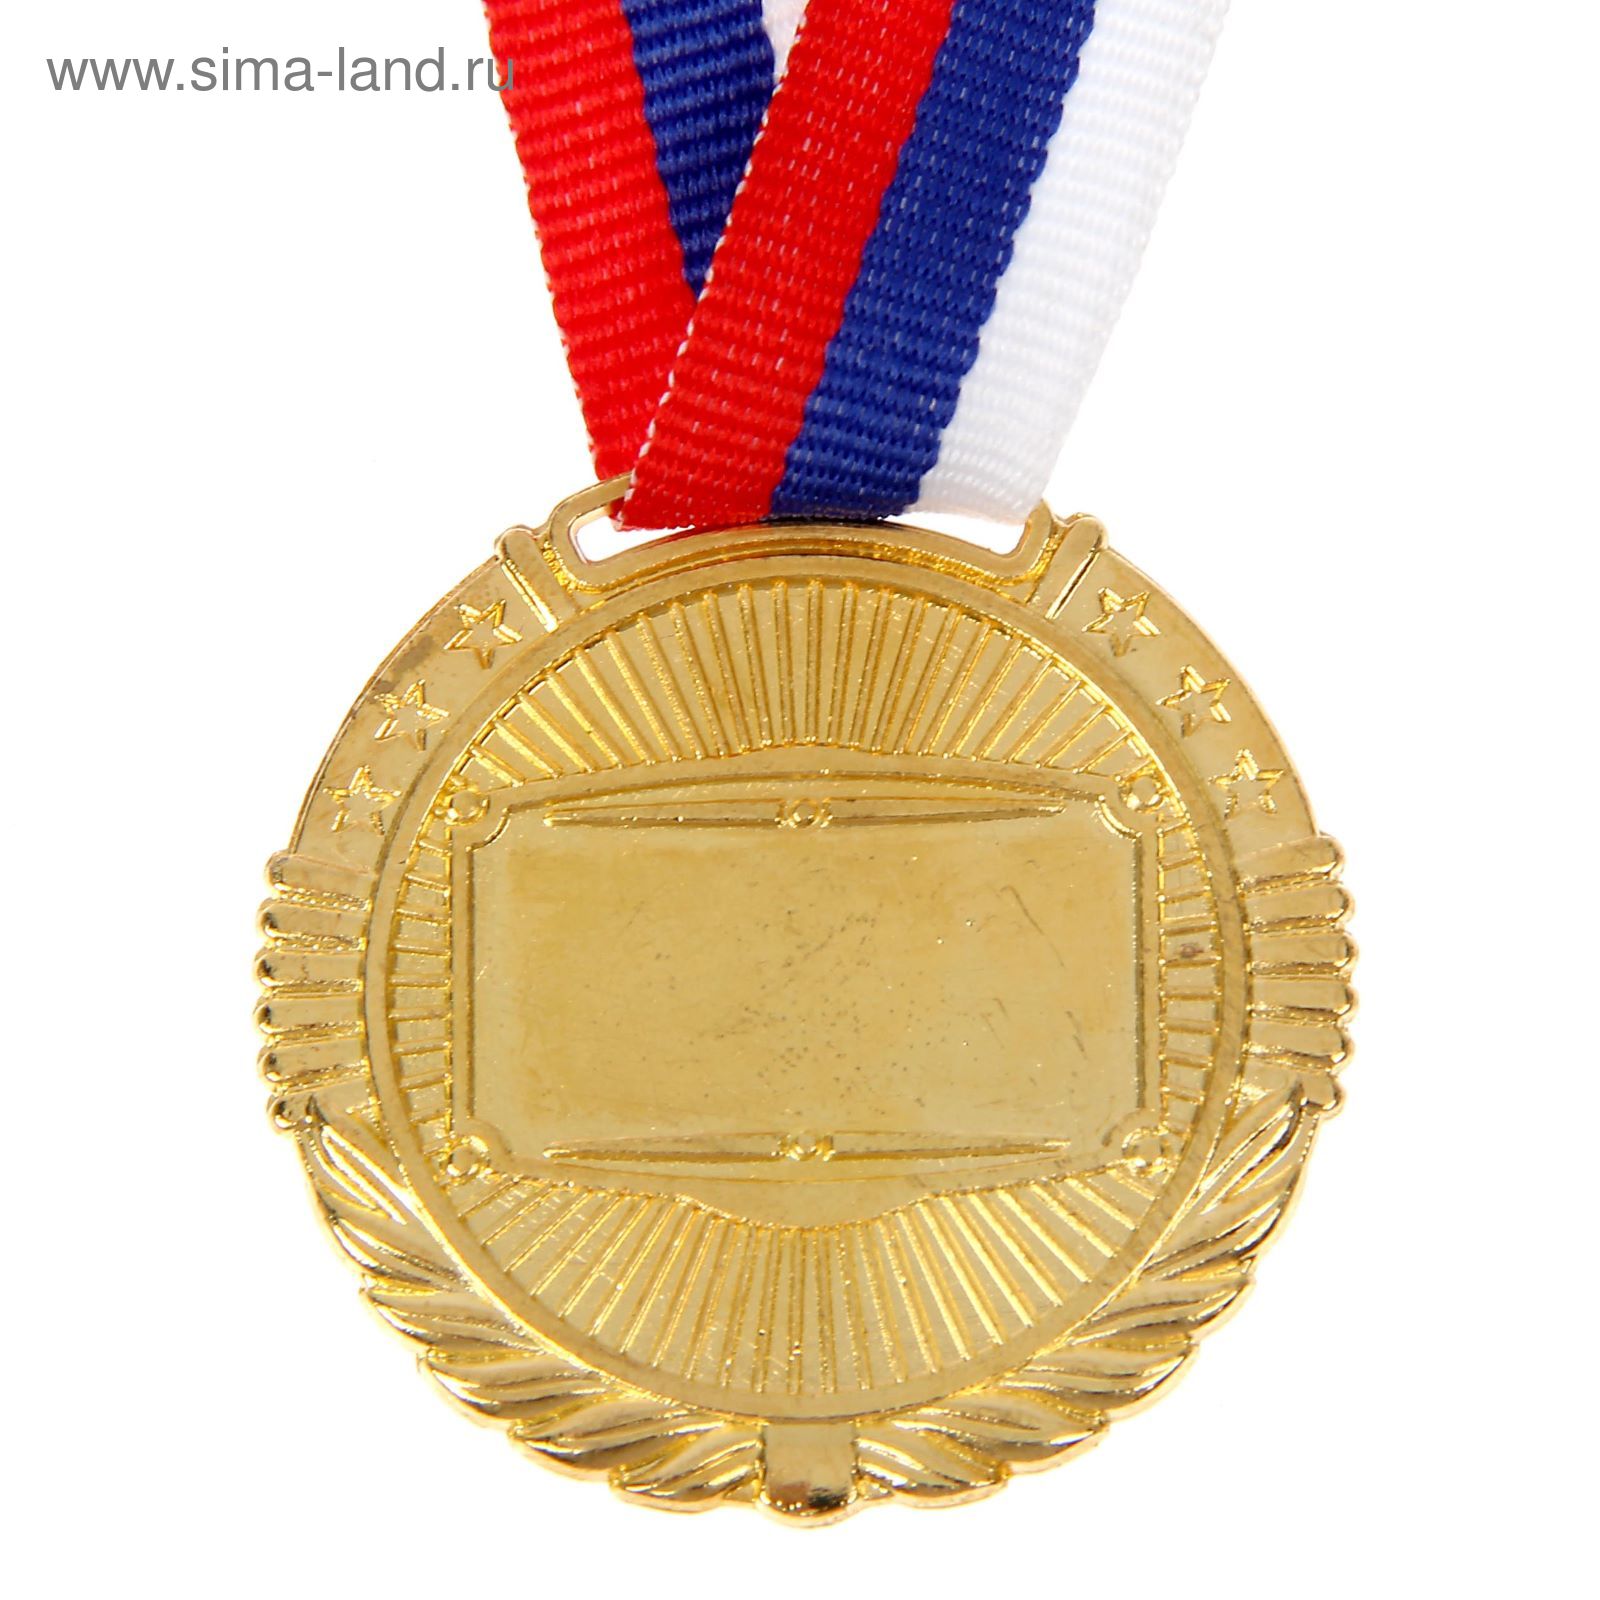 Медали награды купить. Медаль суреті. Медаль d60/063.01a/1 место/золото. Орден за фулл.